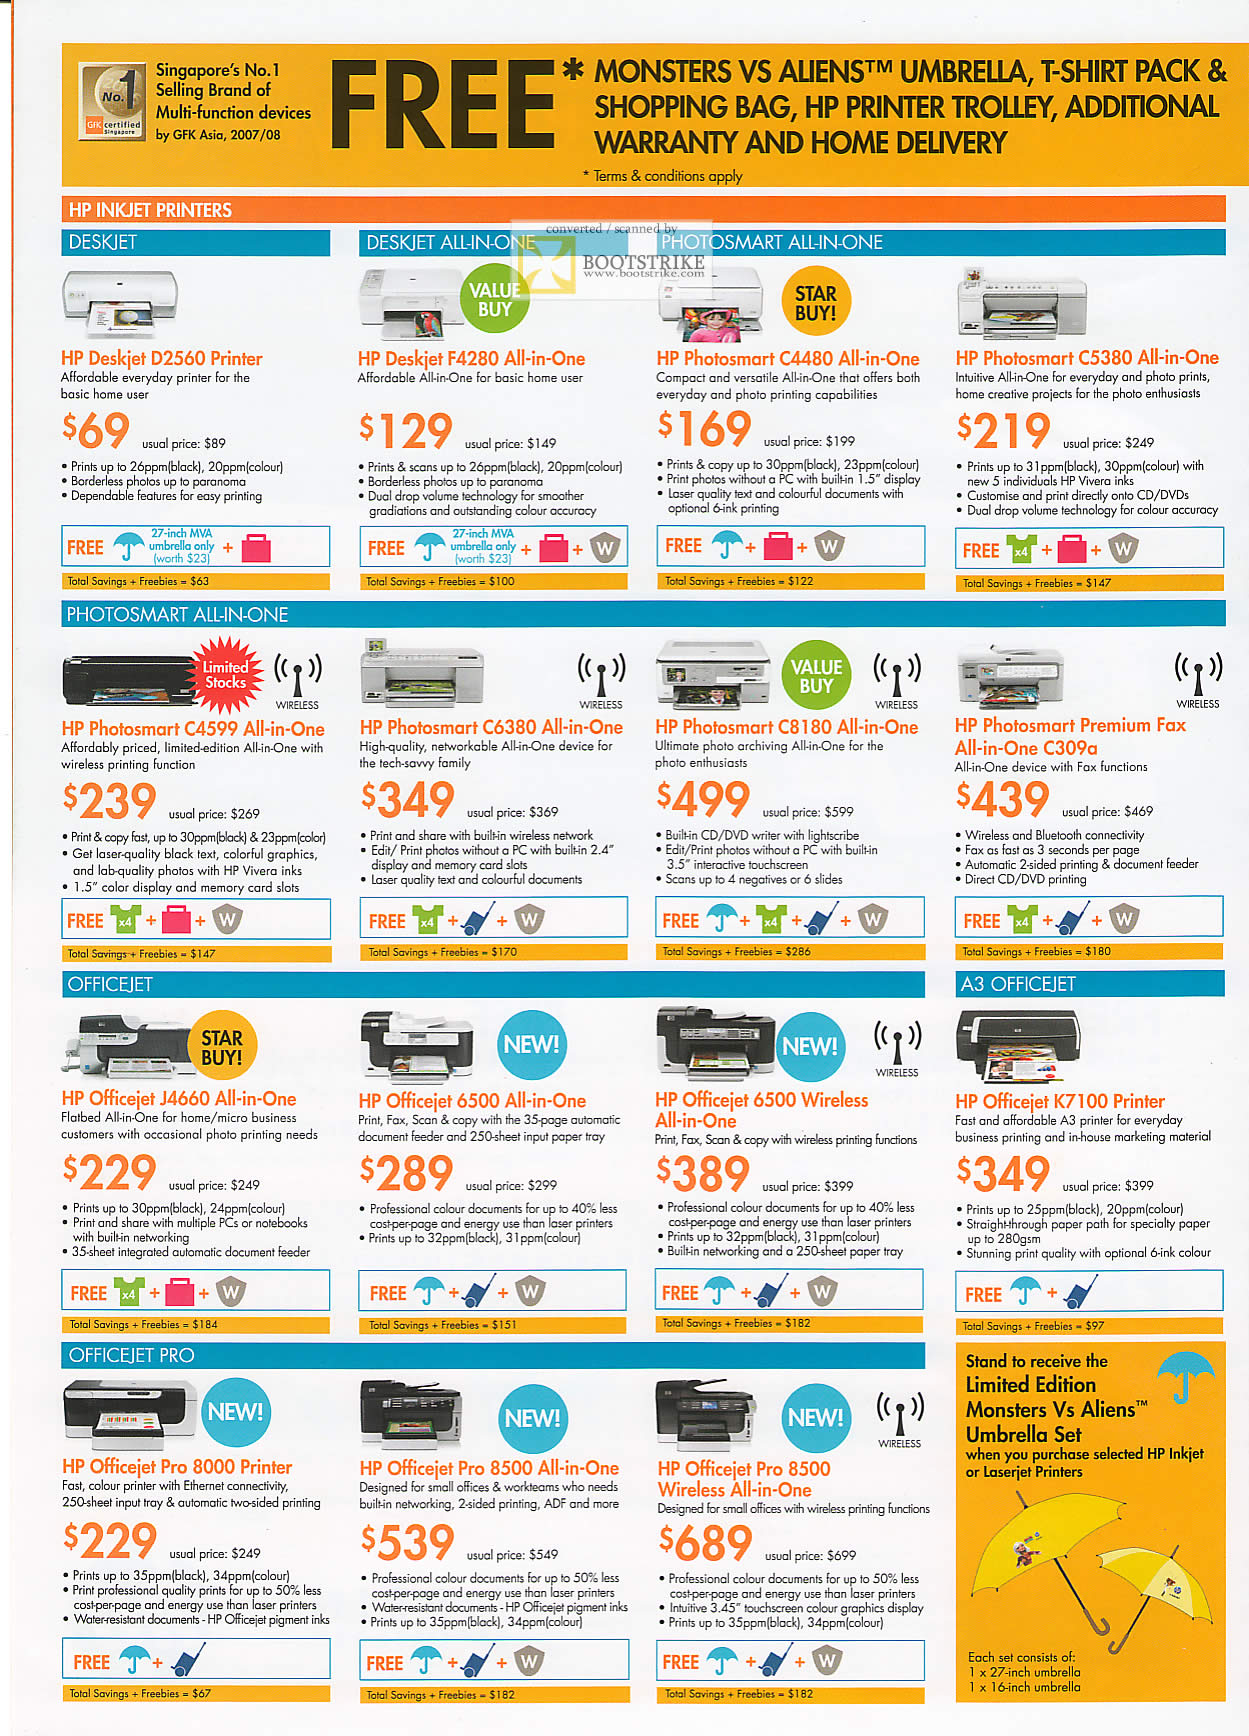 PC Show 2009 price list image brochure of HP Inkjet Deskjet Photosmart Officejet Pro Printers